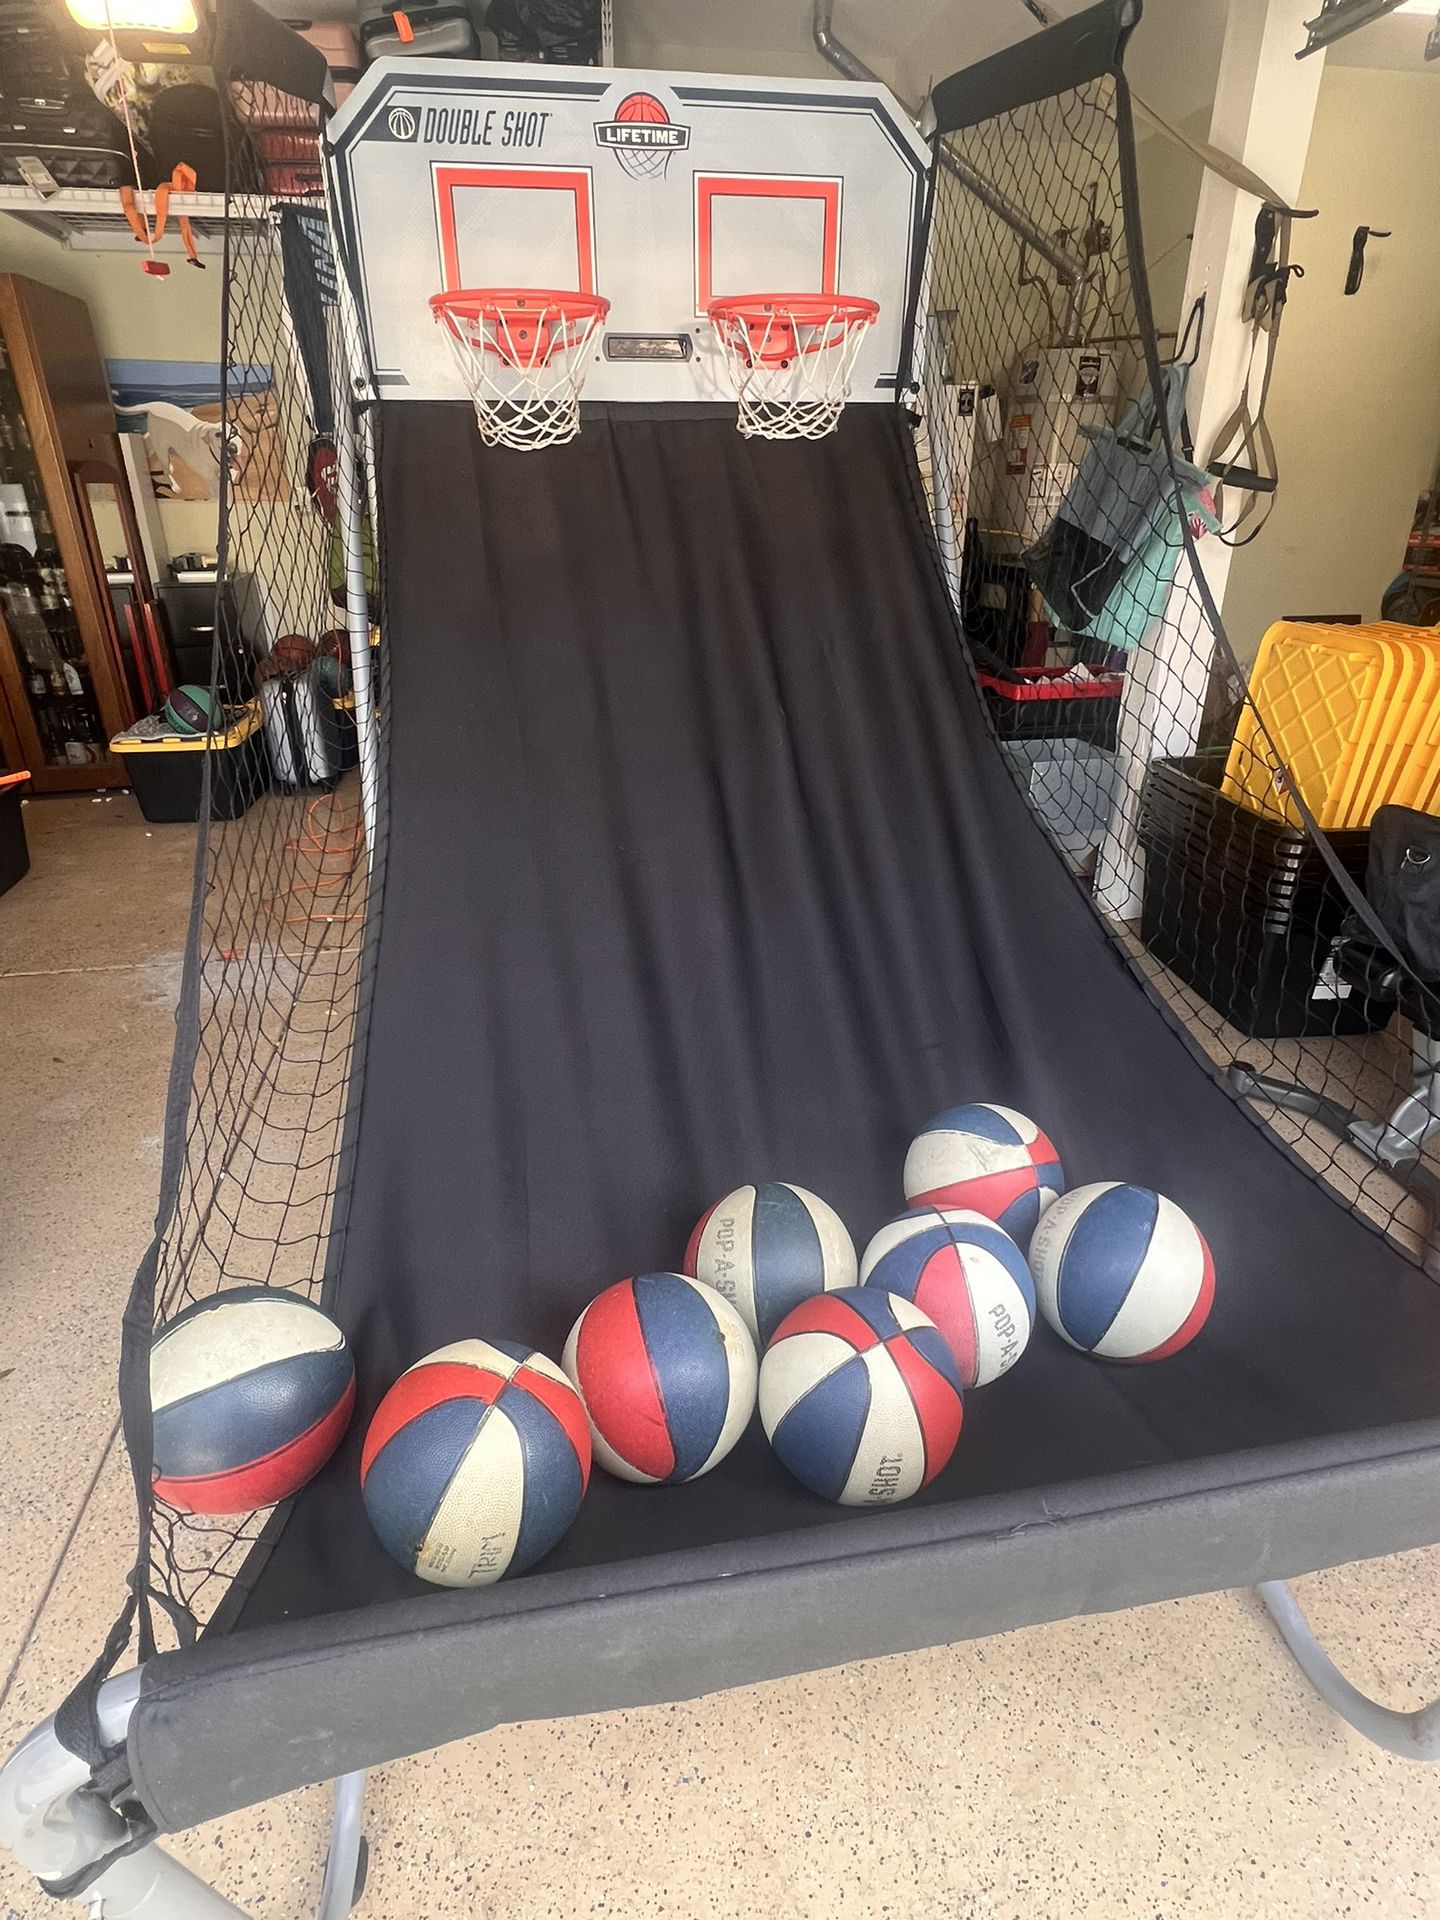 Pop-A-Shot Basketball Arcade Game